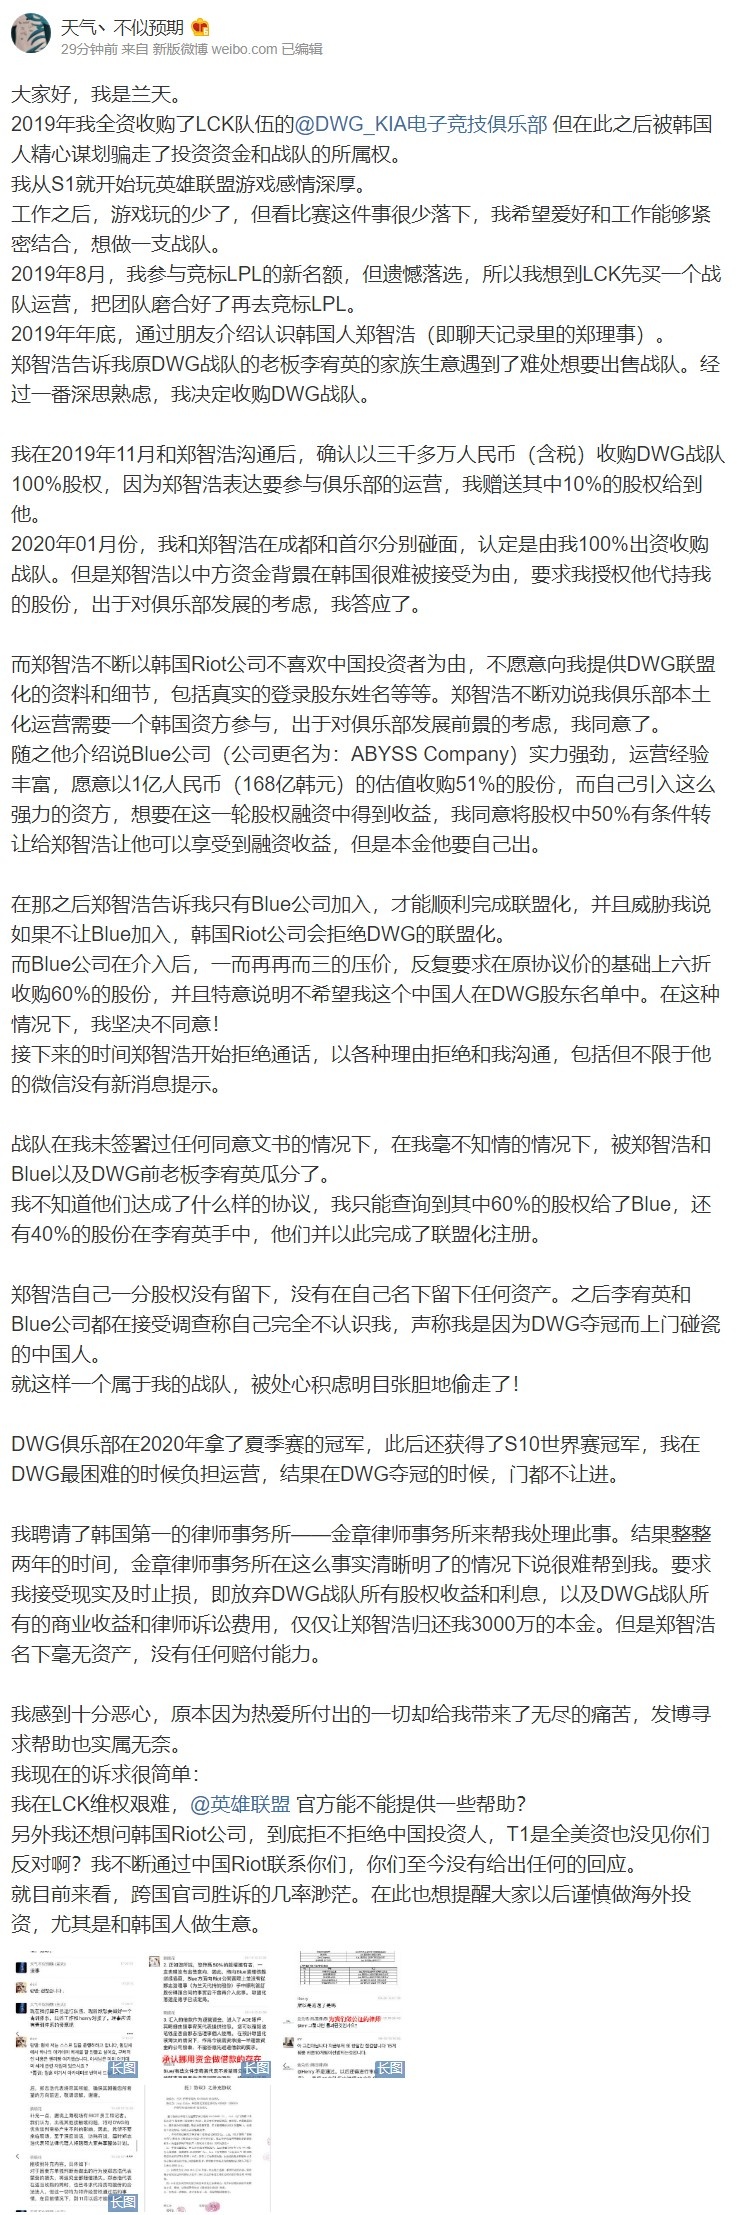 【QY球友会】DK中国老板维权：被韩国人骗走战队所属权，韩国律师和官方不作为